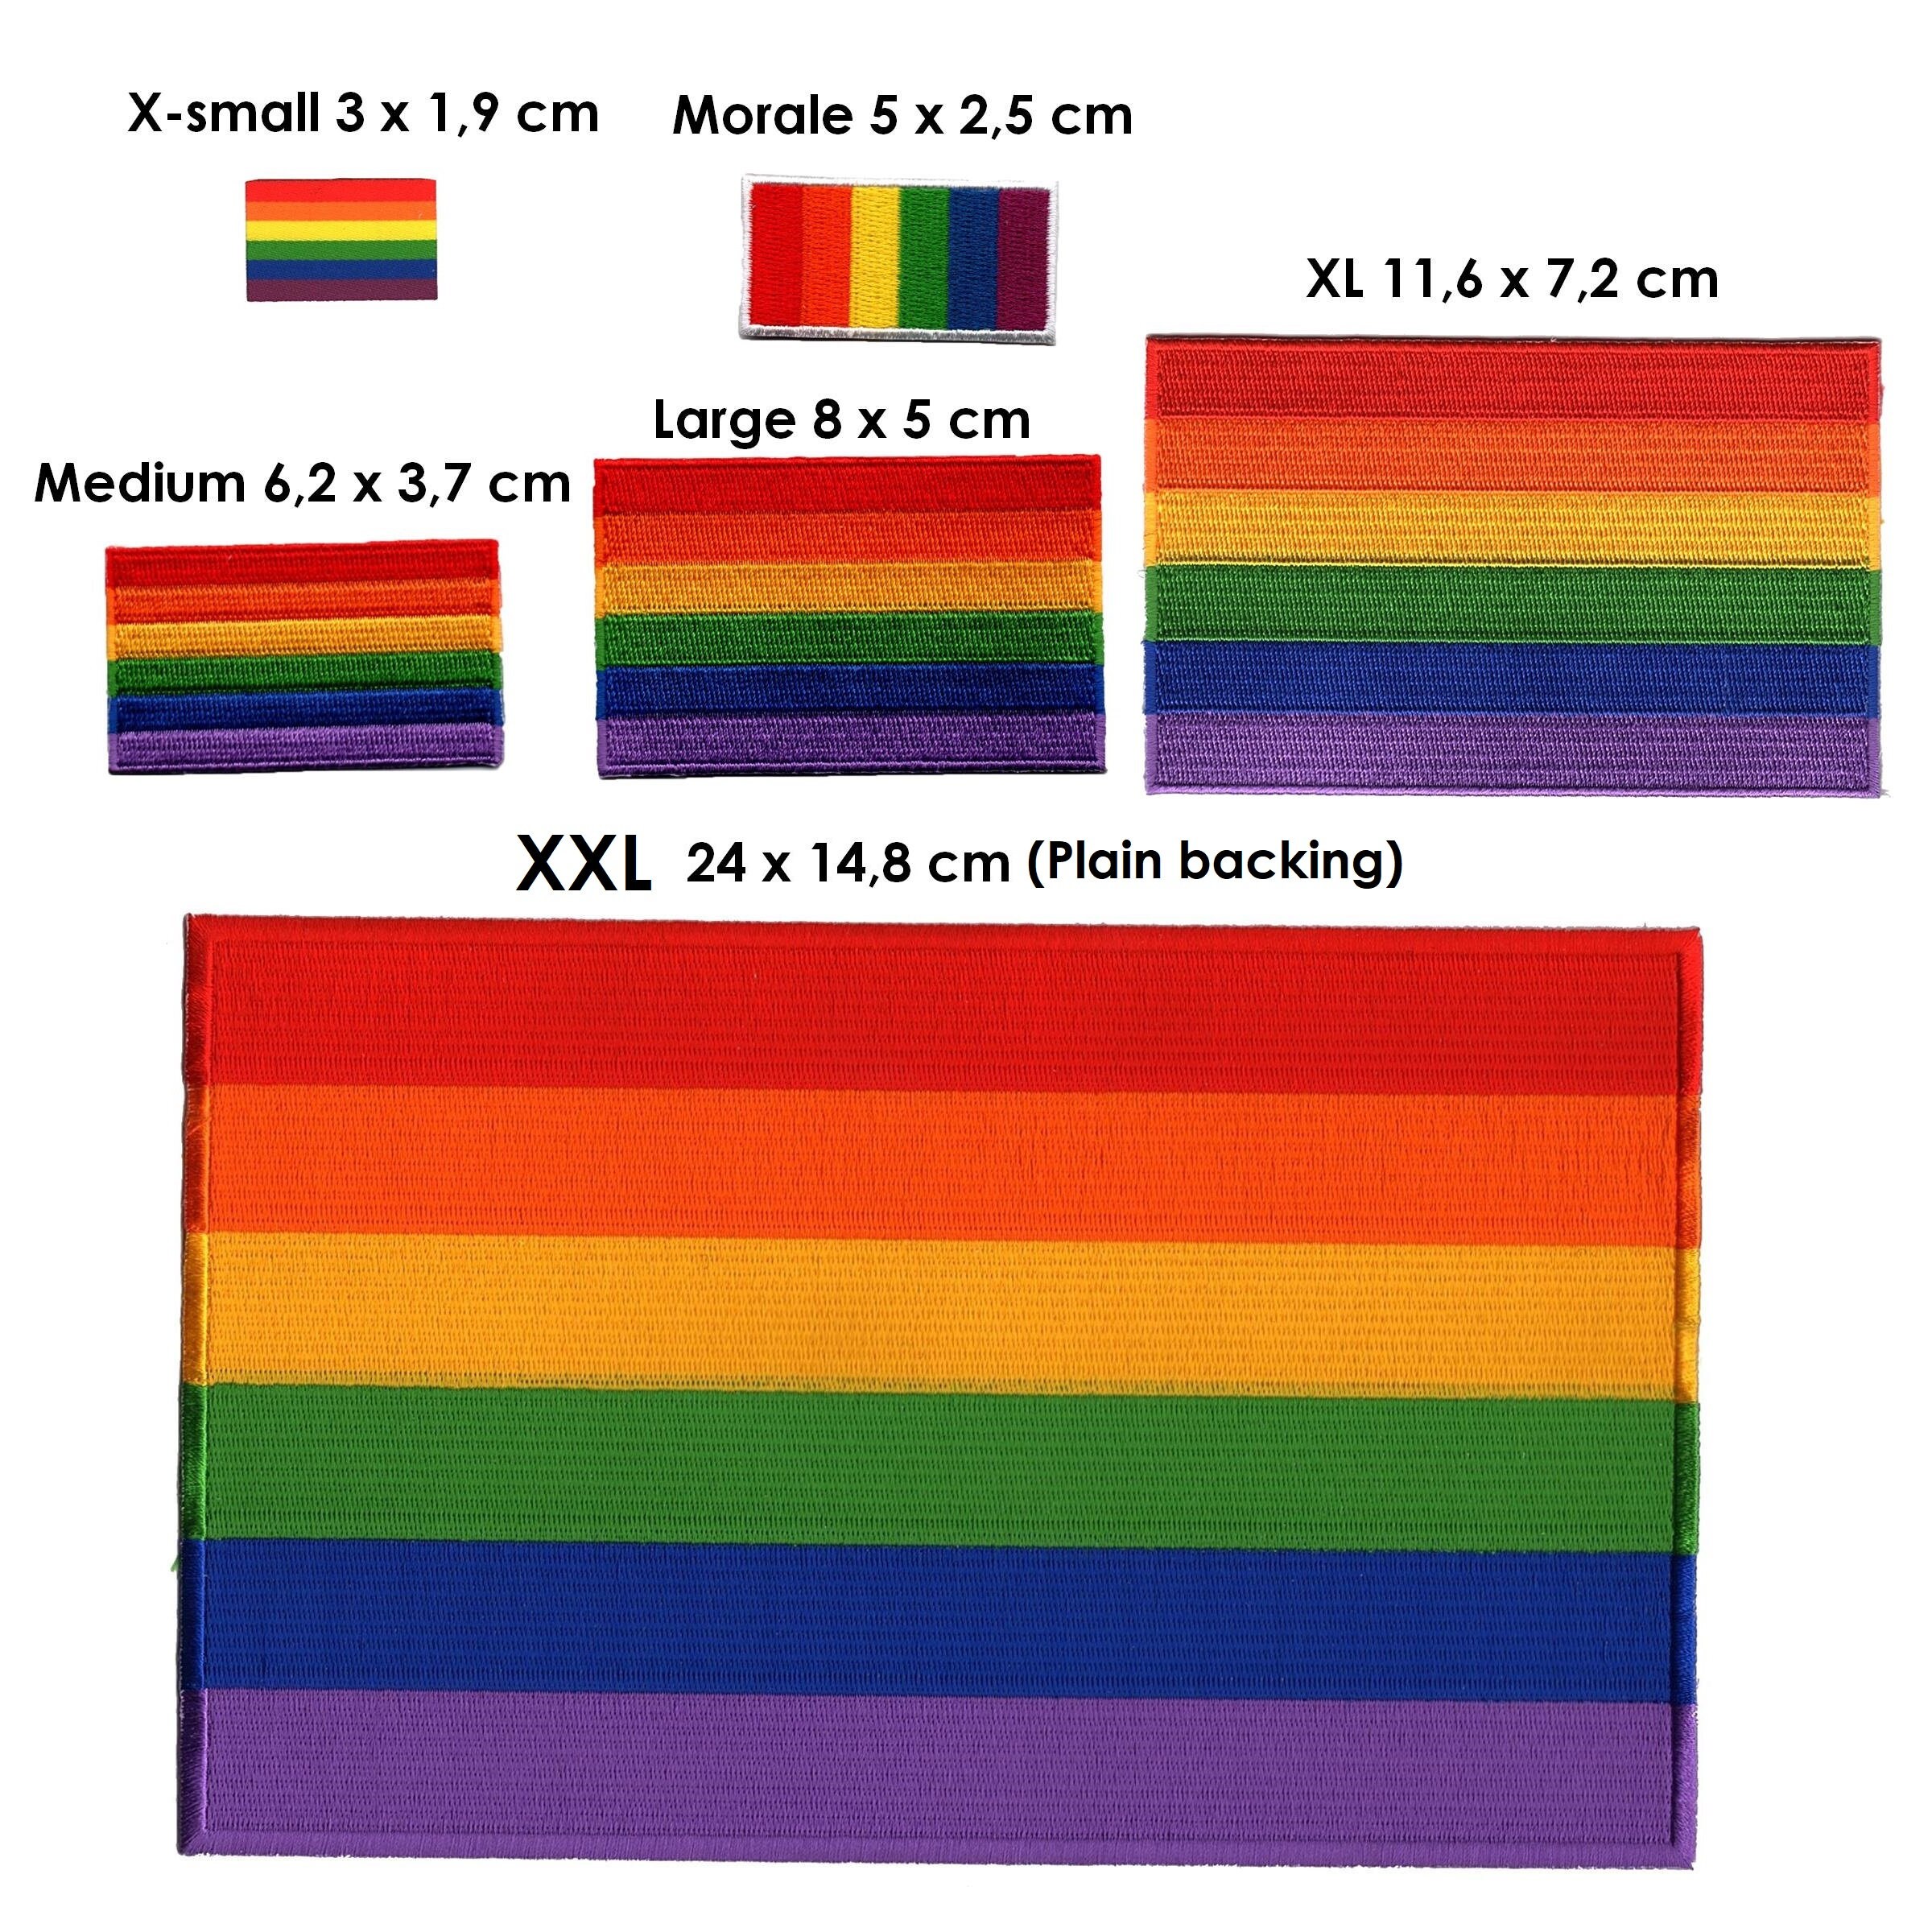 Mexico flag patch, 3.5cm x 2.5cm